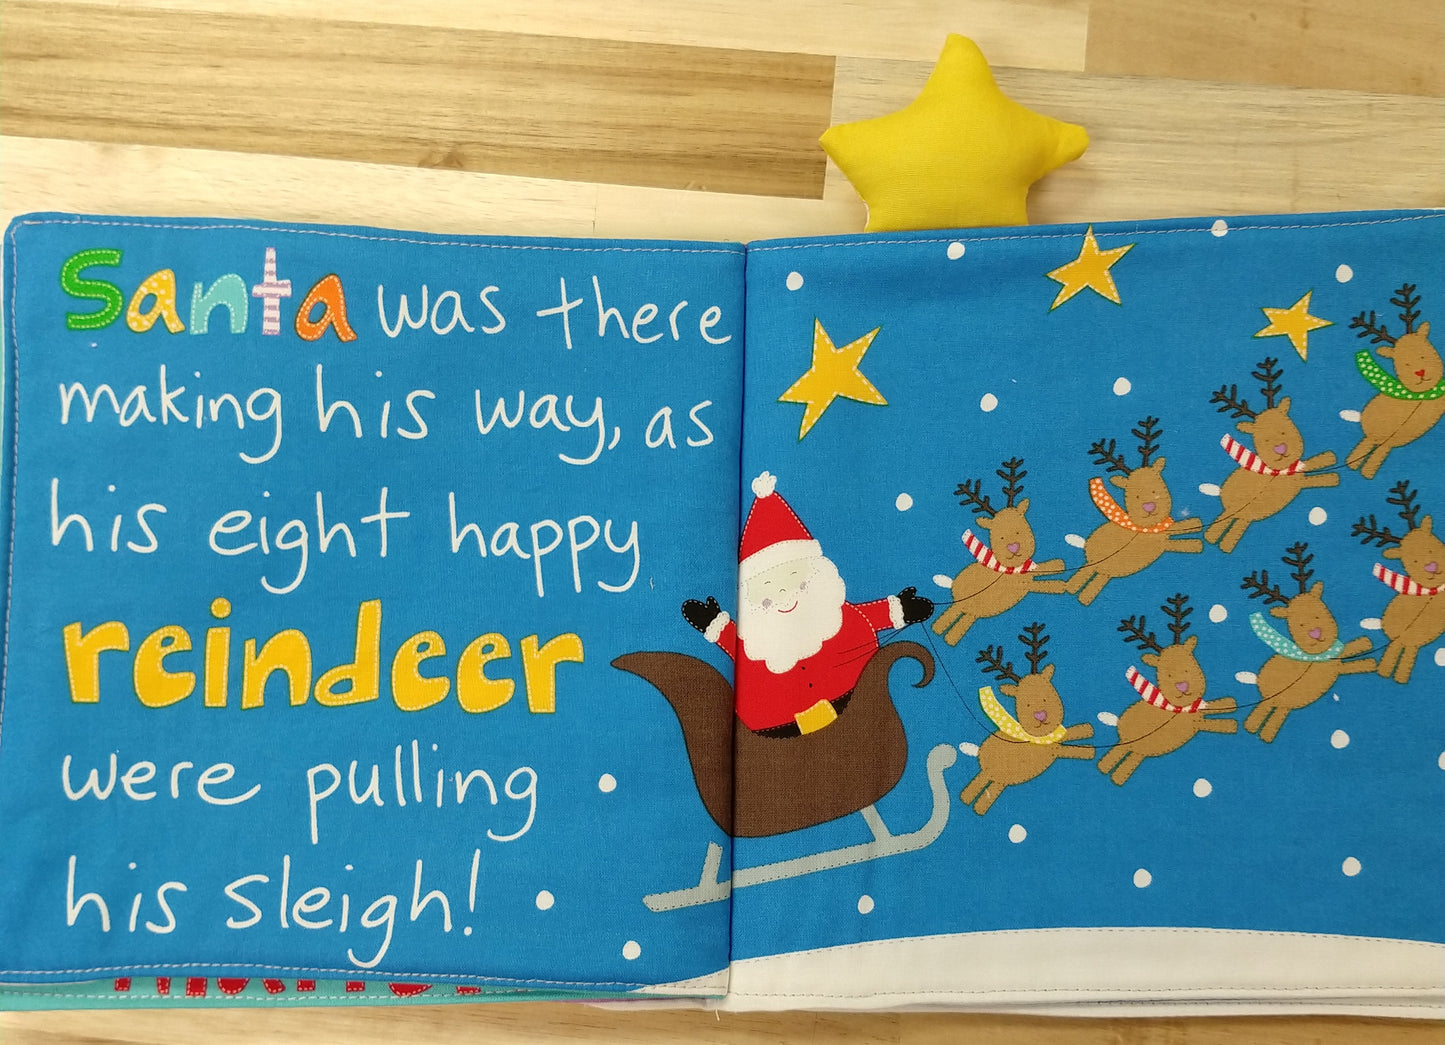 Twas the Night Before Christmas! Fabric Children's Book Panel